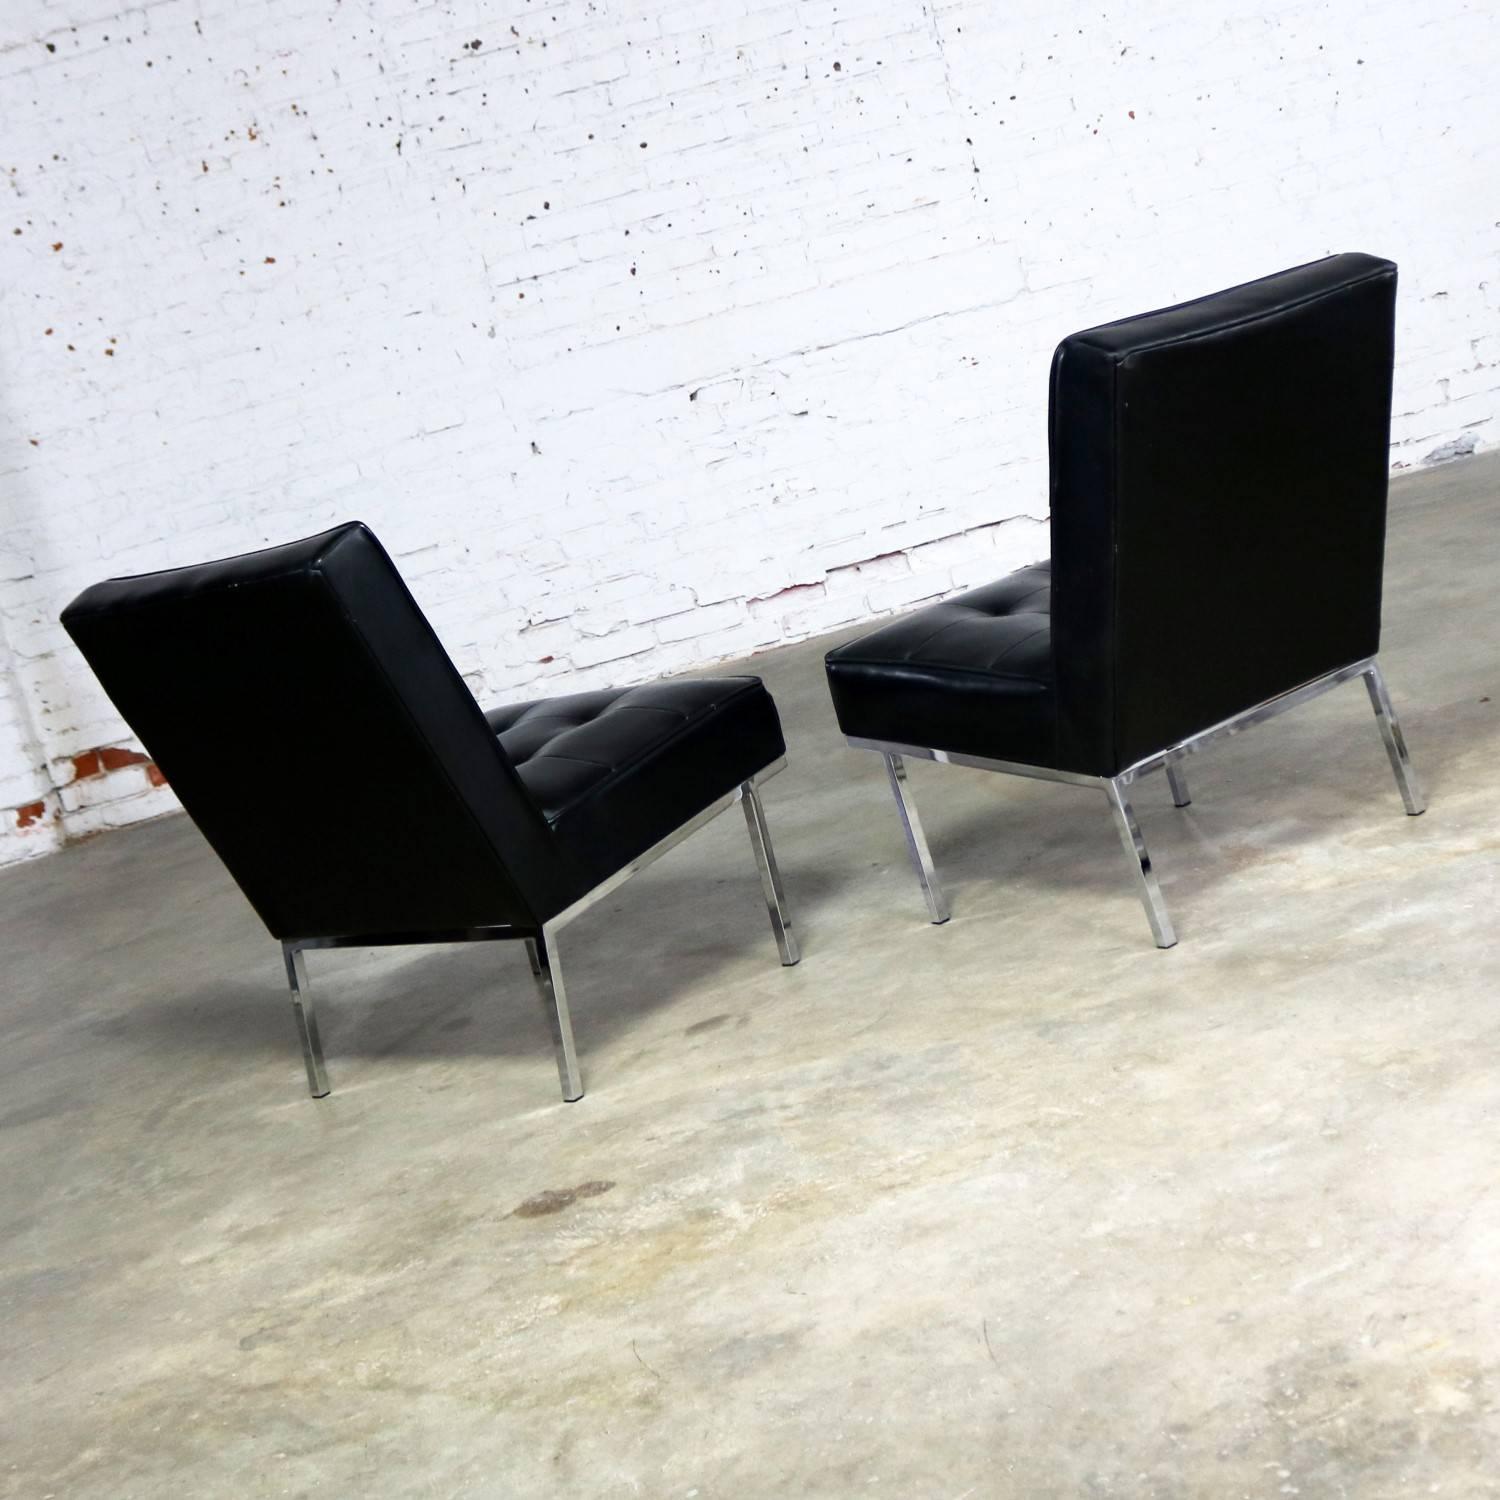 American Paoli Chair Co. Black Naugahyde Chrome MCM Slipper Chairs Style Florence Knoll For Sale